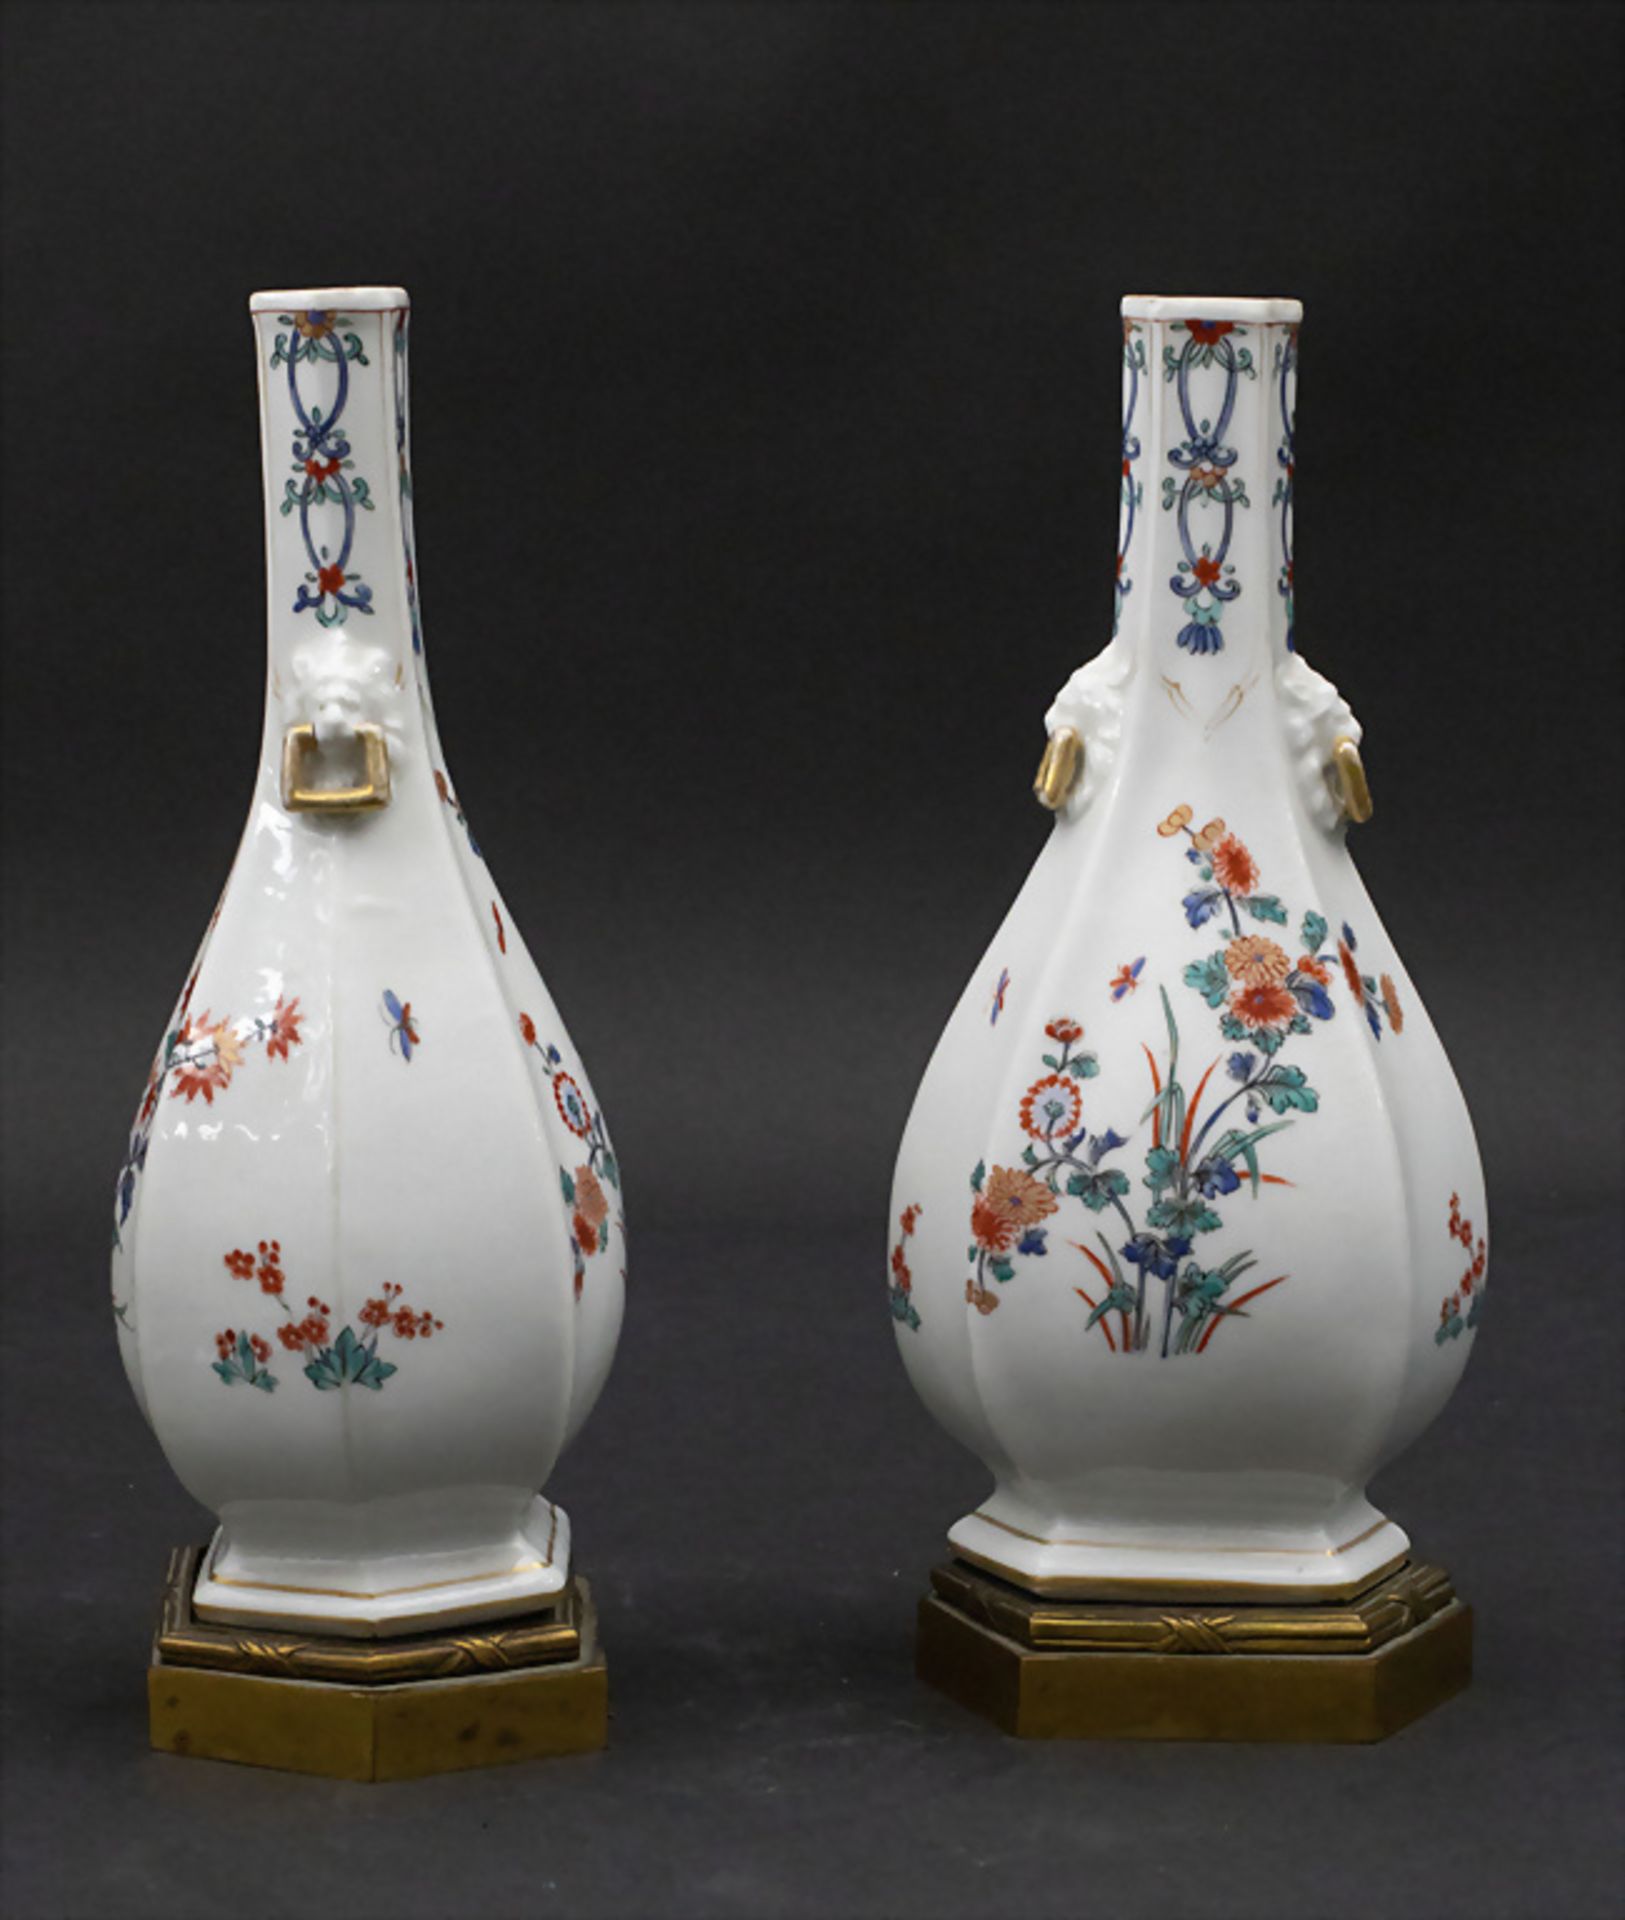 Kakiemon Deckelvasen-Paar / A pair of Kakiemon lidded vases, wohl Meissen oder Chantilly, 18. Jh. - Image 6 of 12